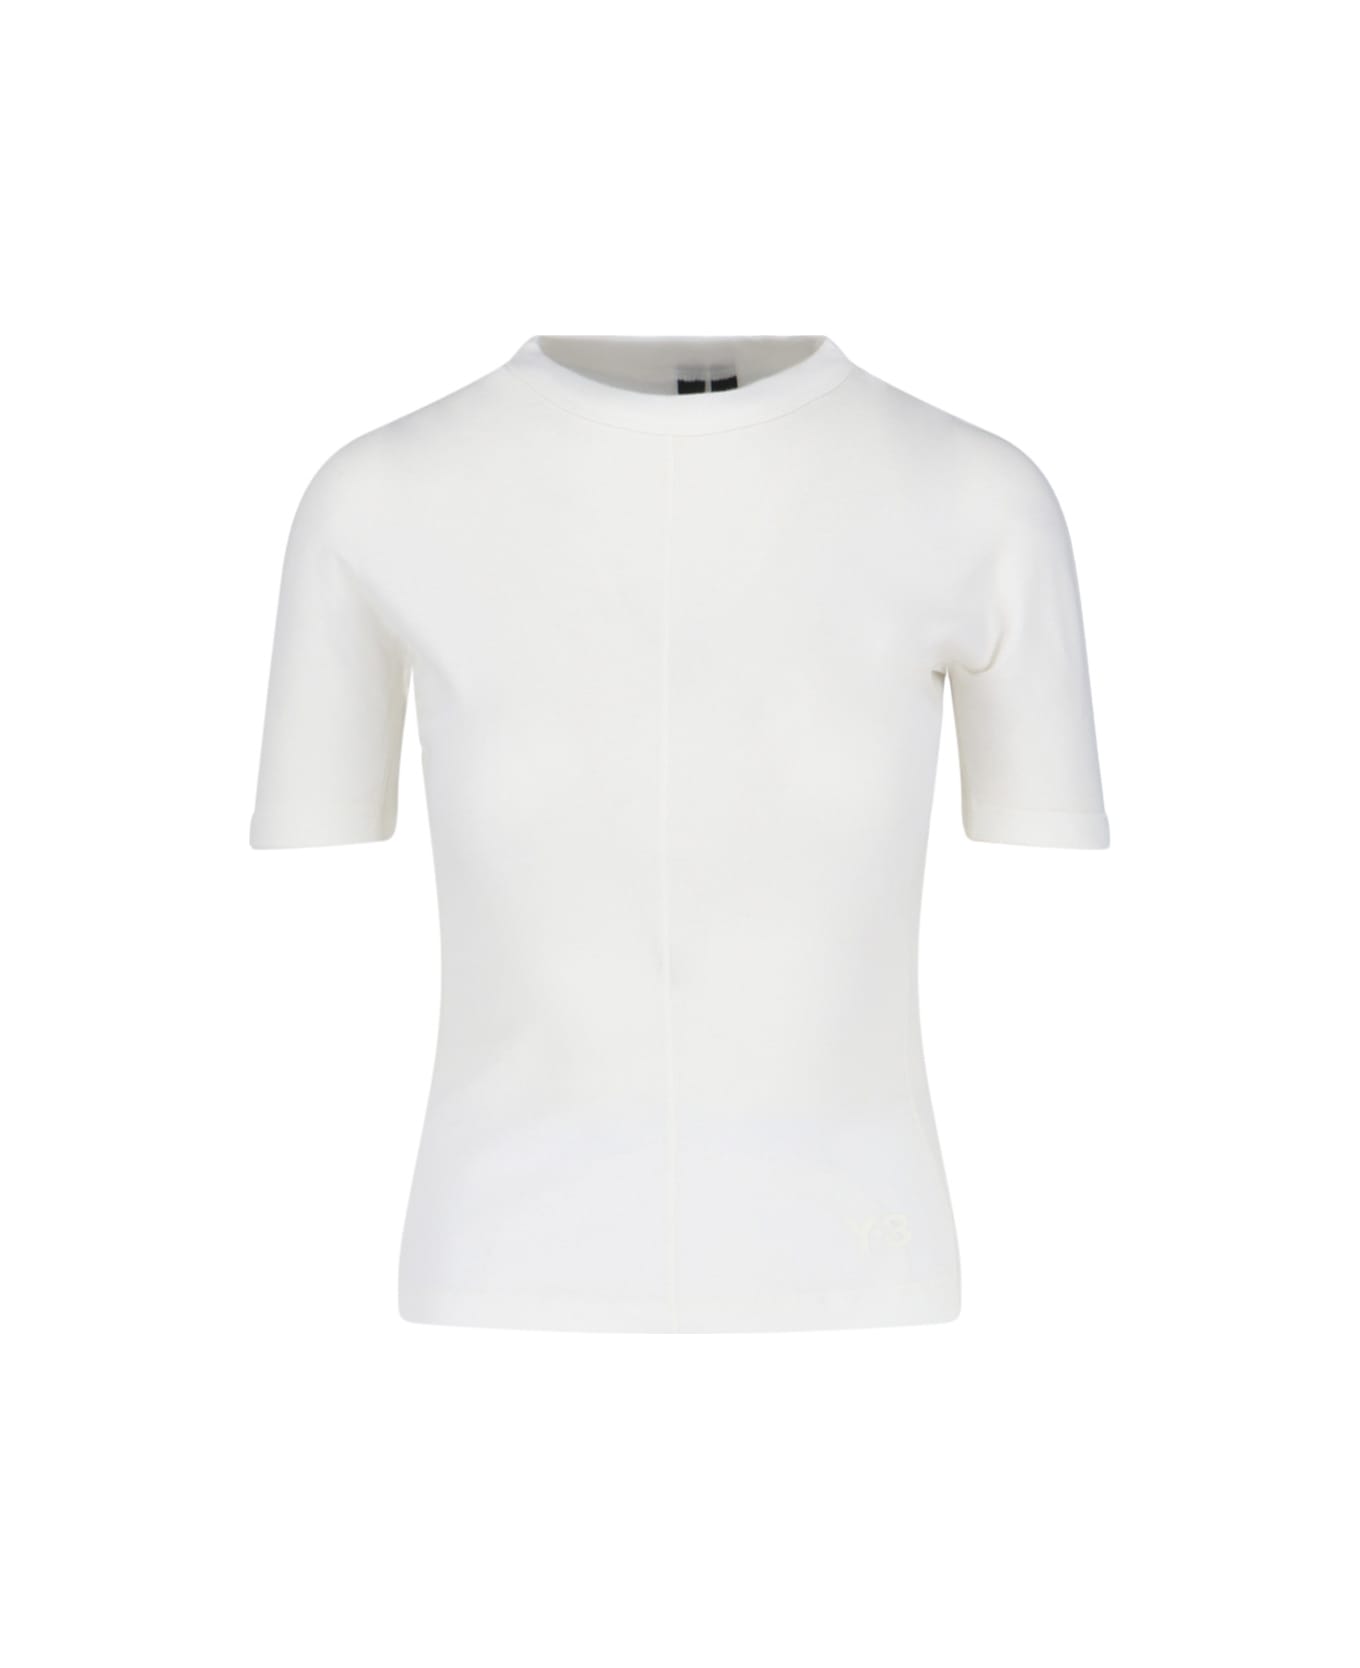 Y-3 Basic T-shirt - White